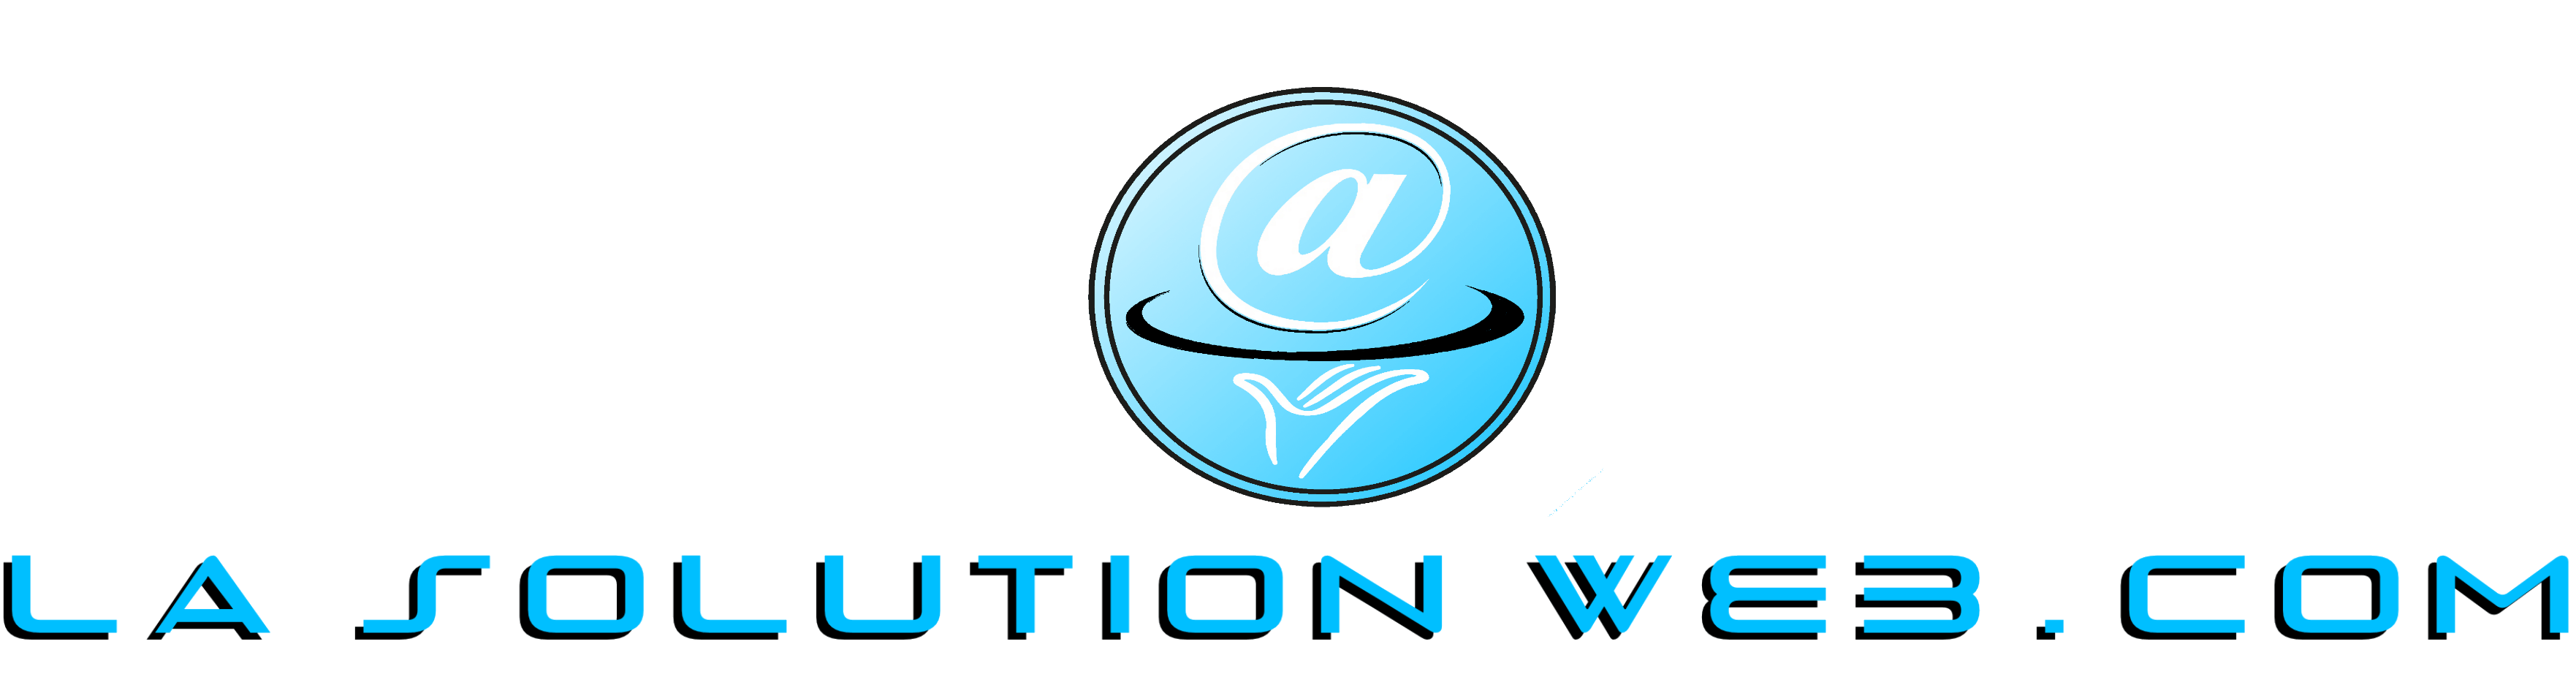 la solution web com logo blanc 1